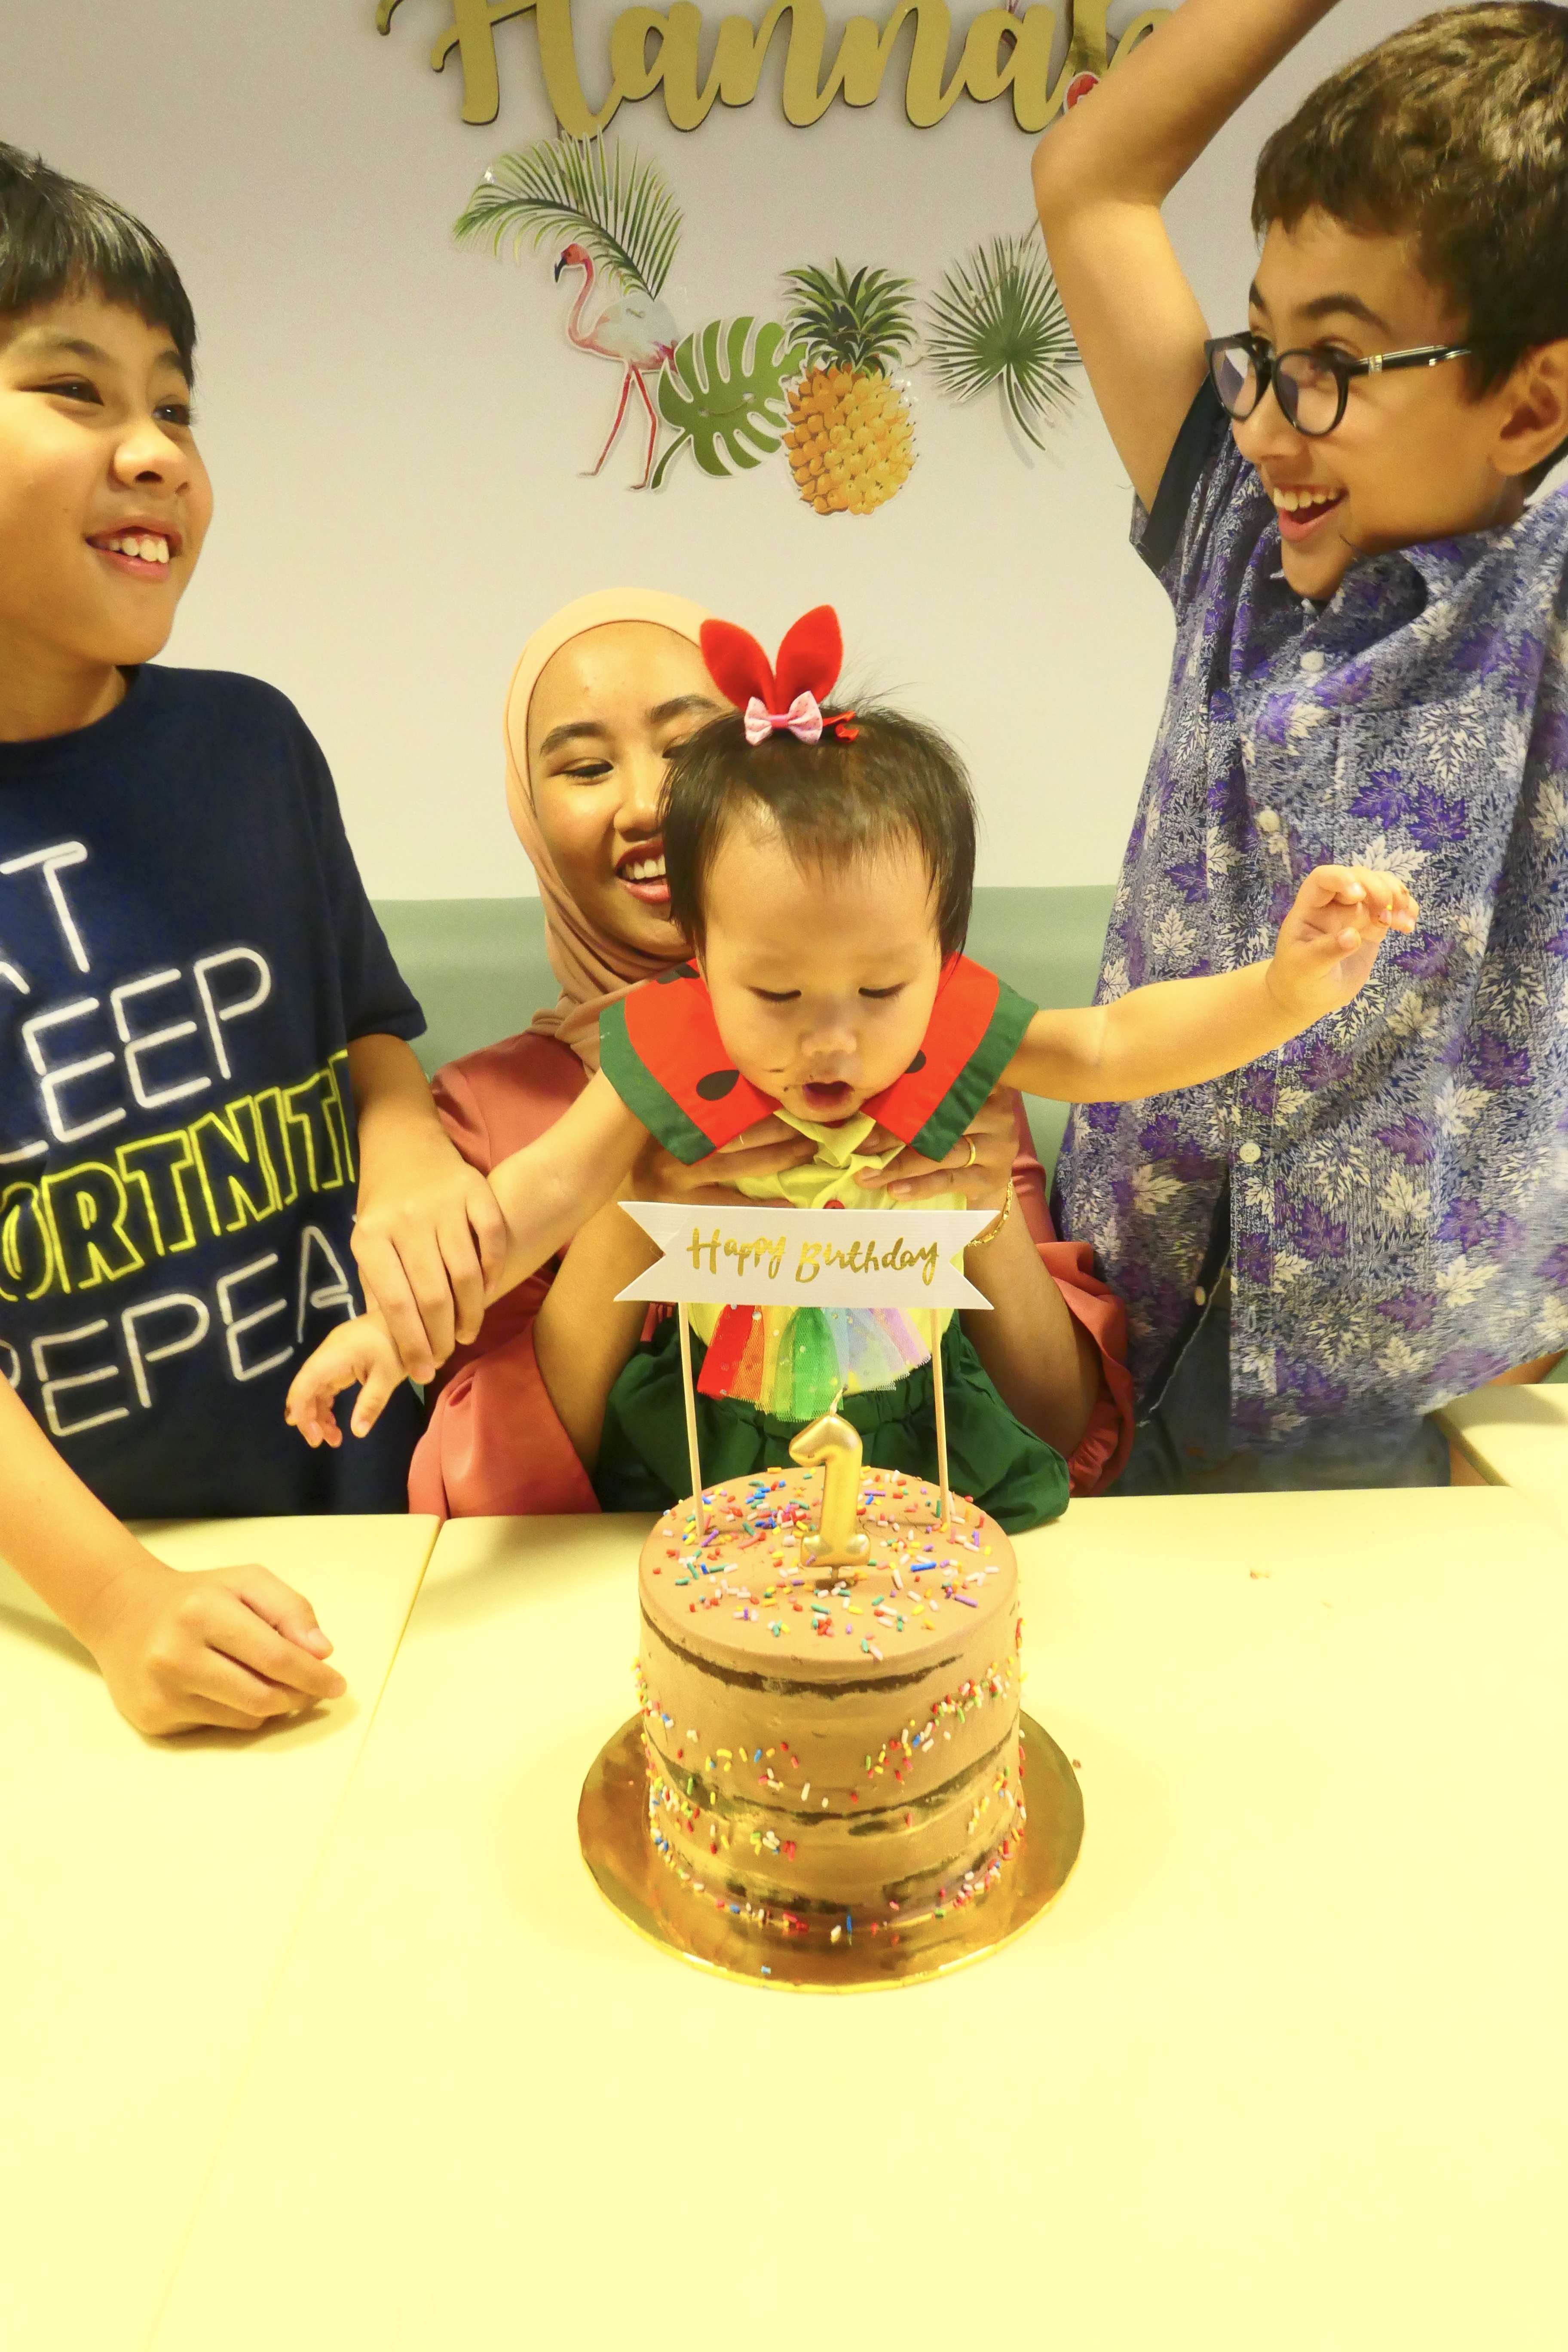 Smash Cake for Baby's First Birthday: Creating Cherished Memories